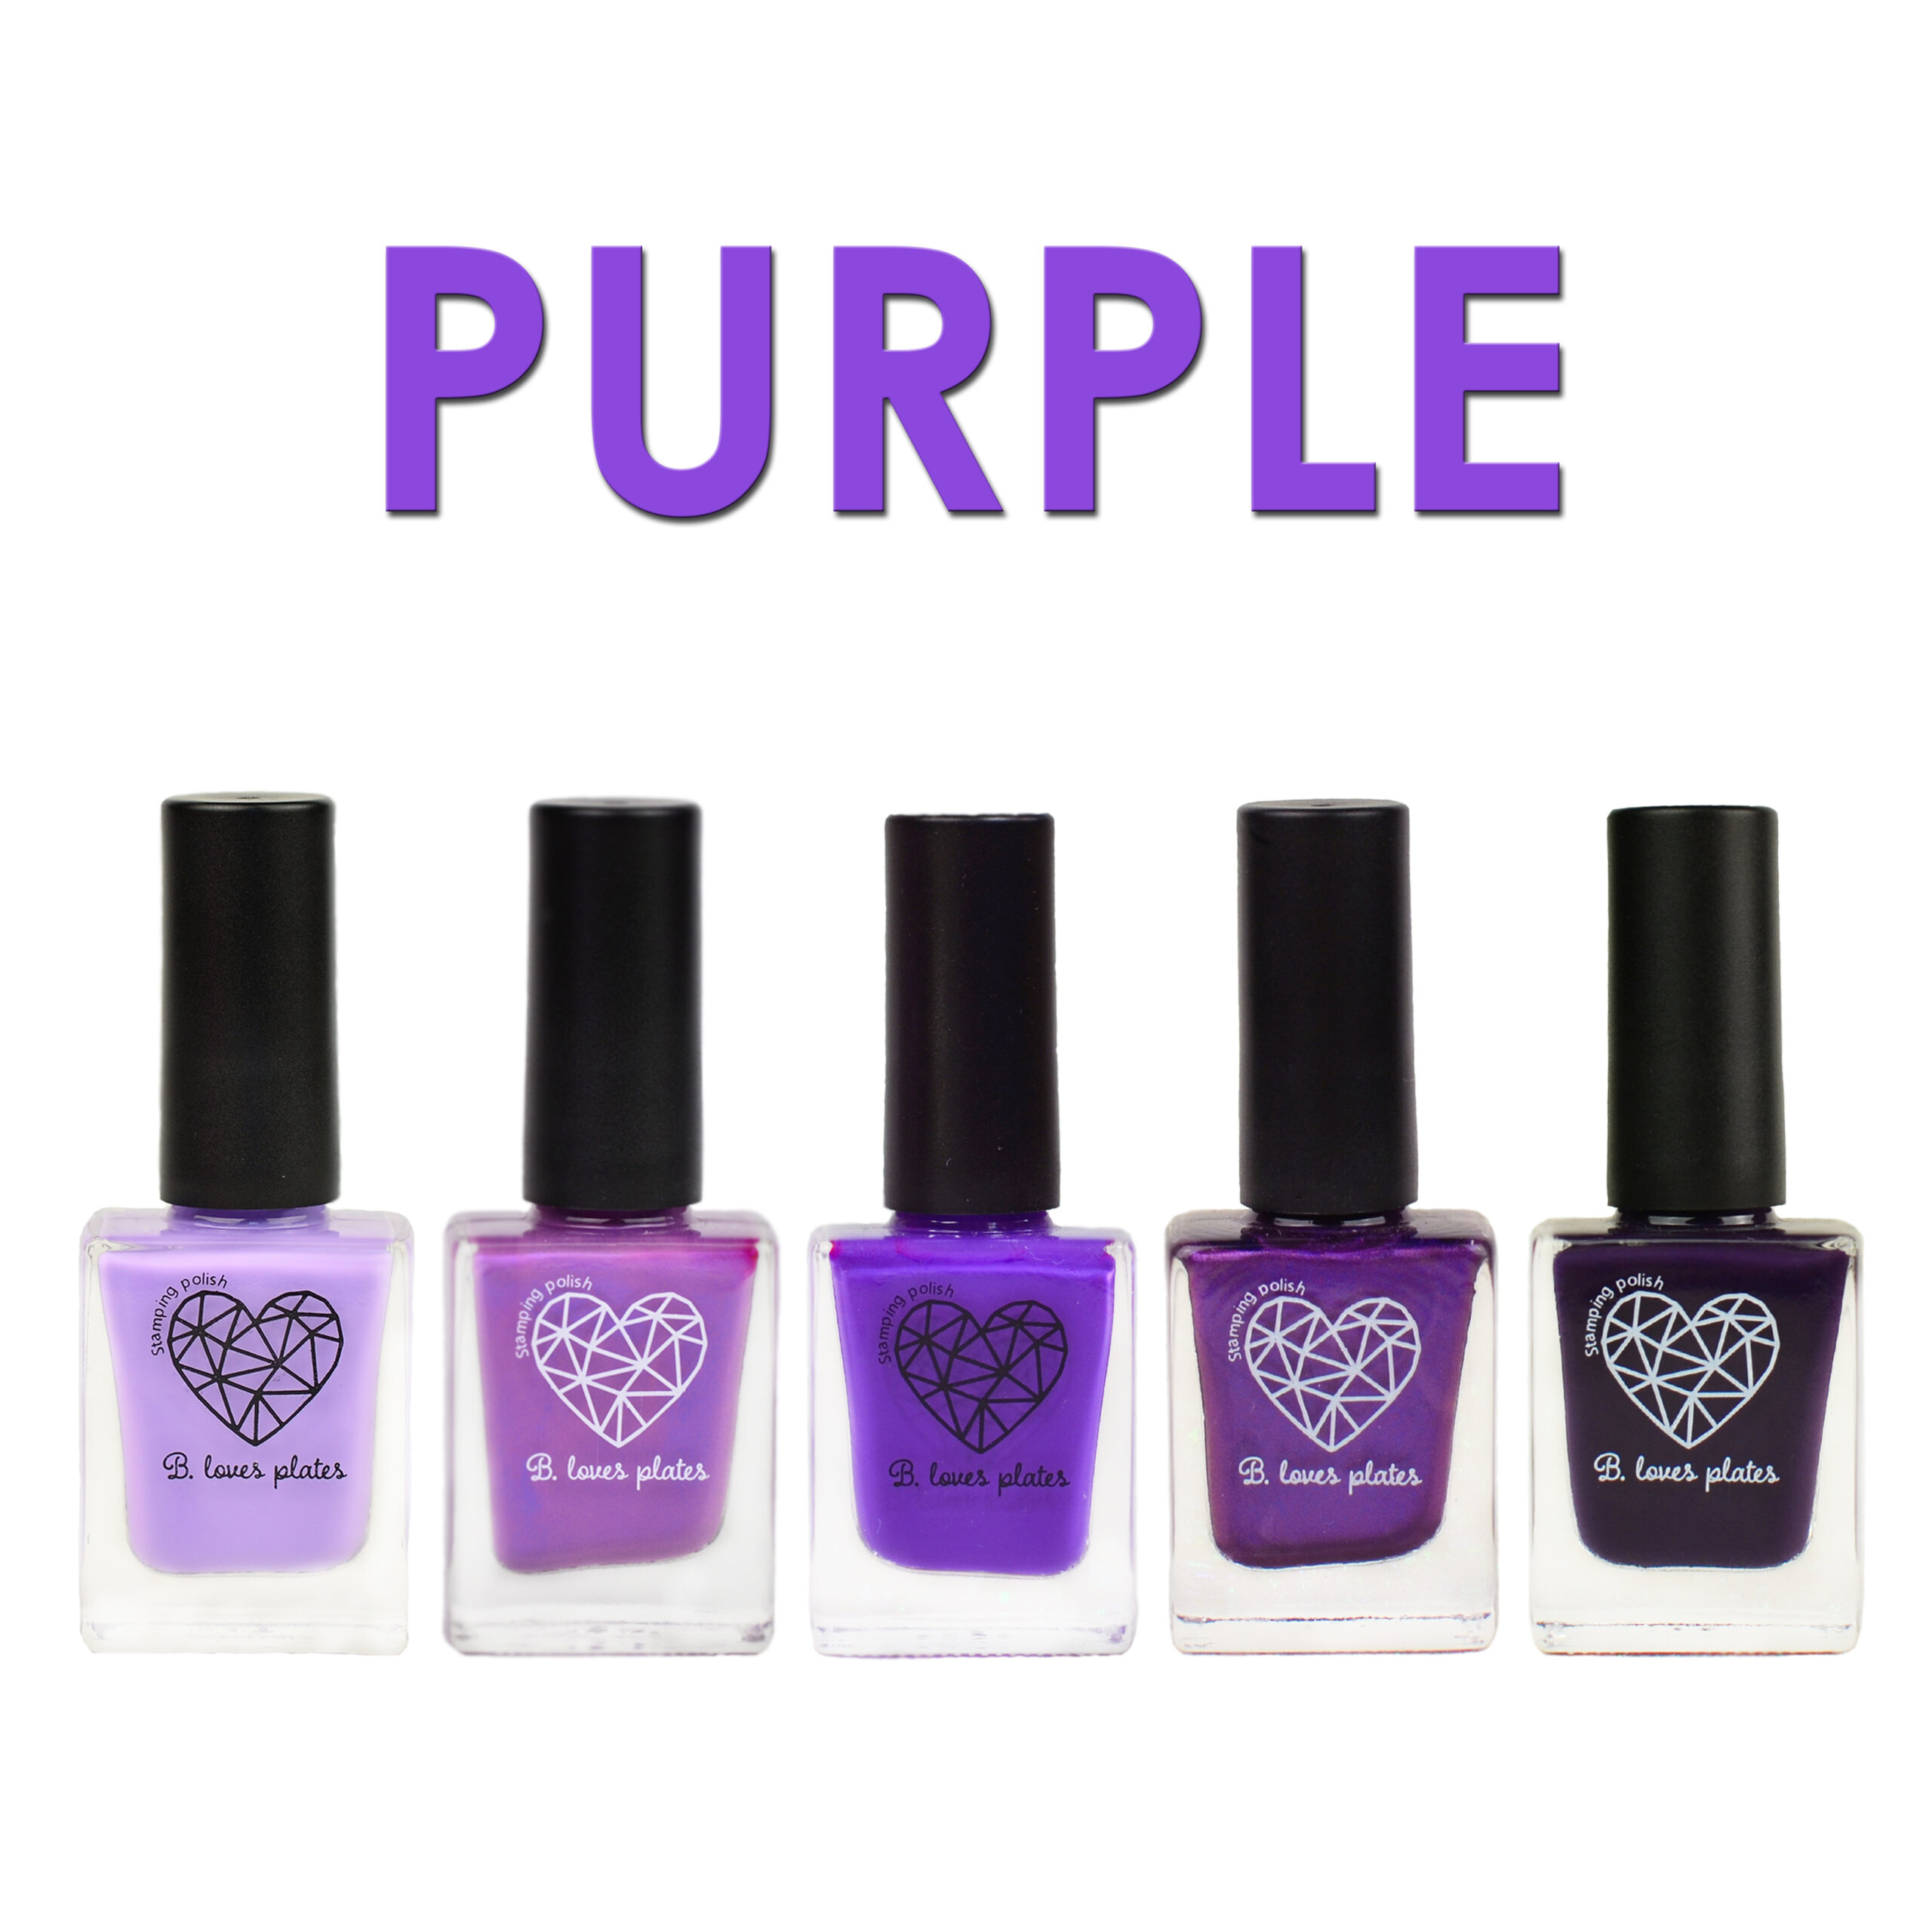 b-loves-plates-lakier-do-stempli-plytki-stamping-nails-nail-art-stempelki-purple-1